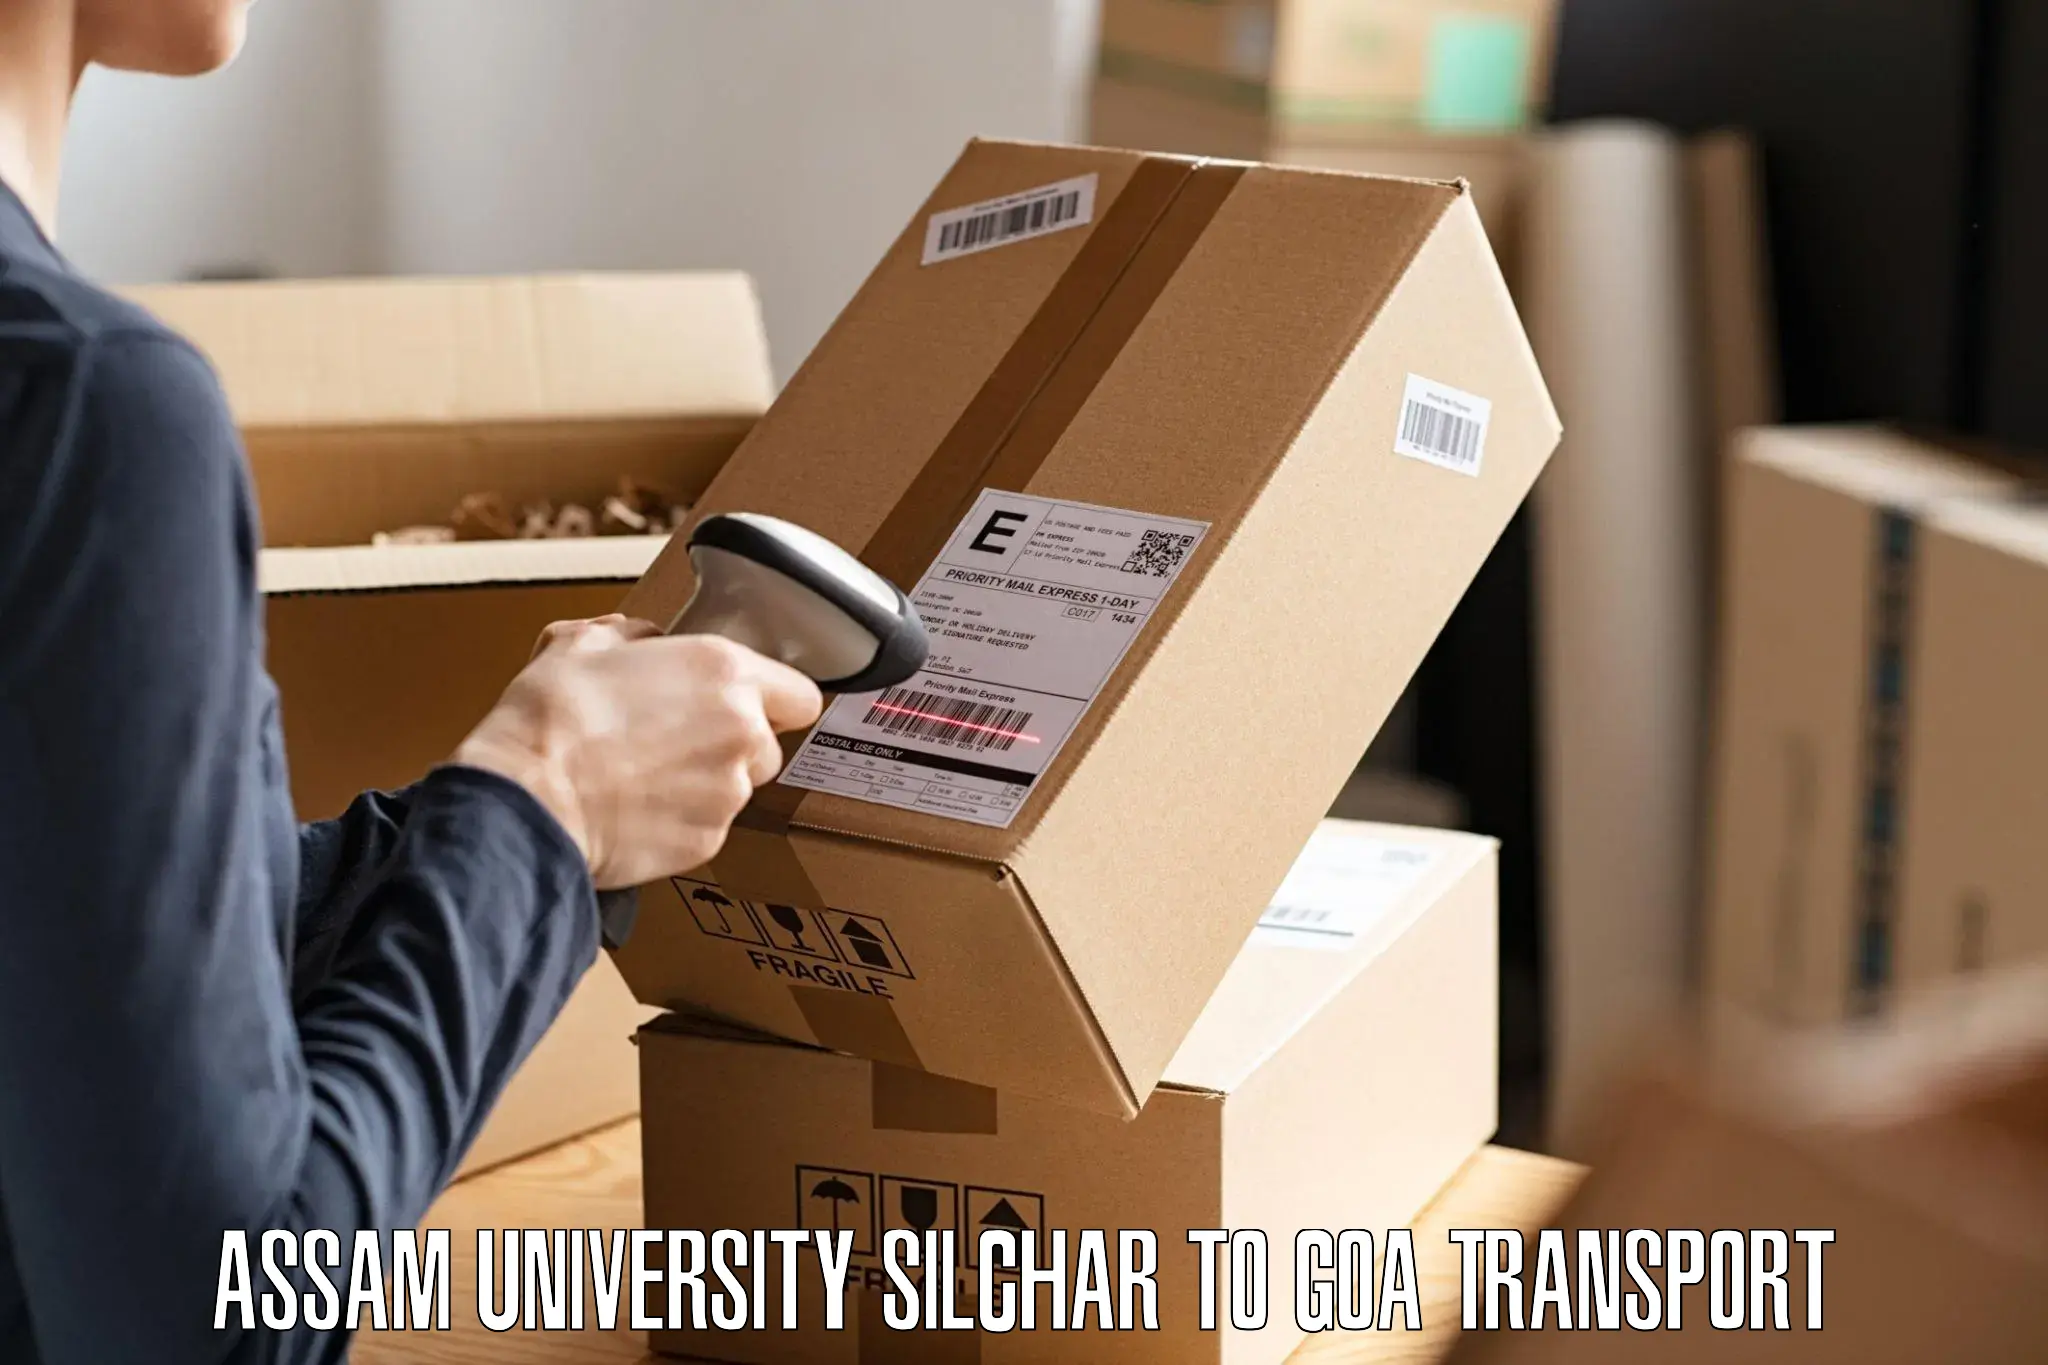 Furniture transport service Assam University Silchar to IIT Goa